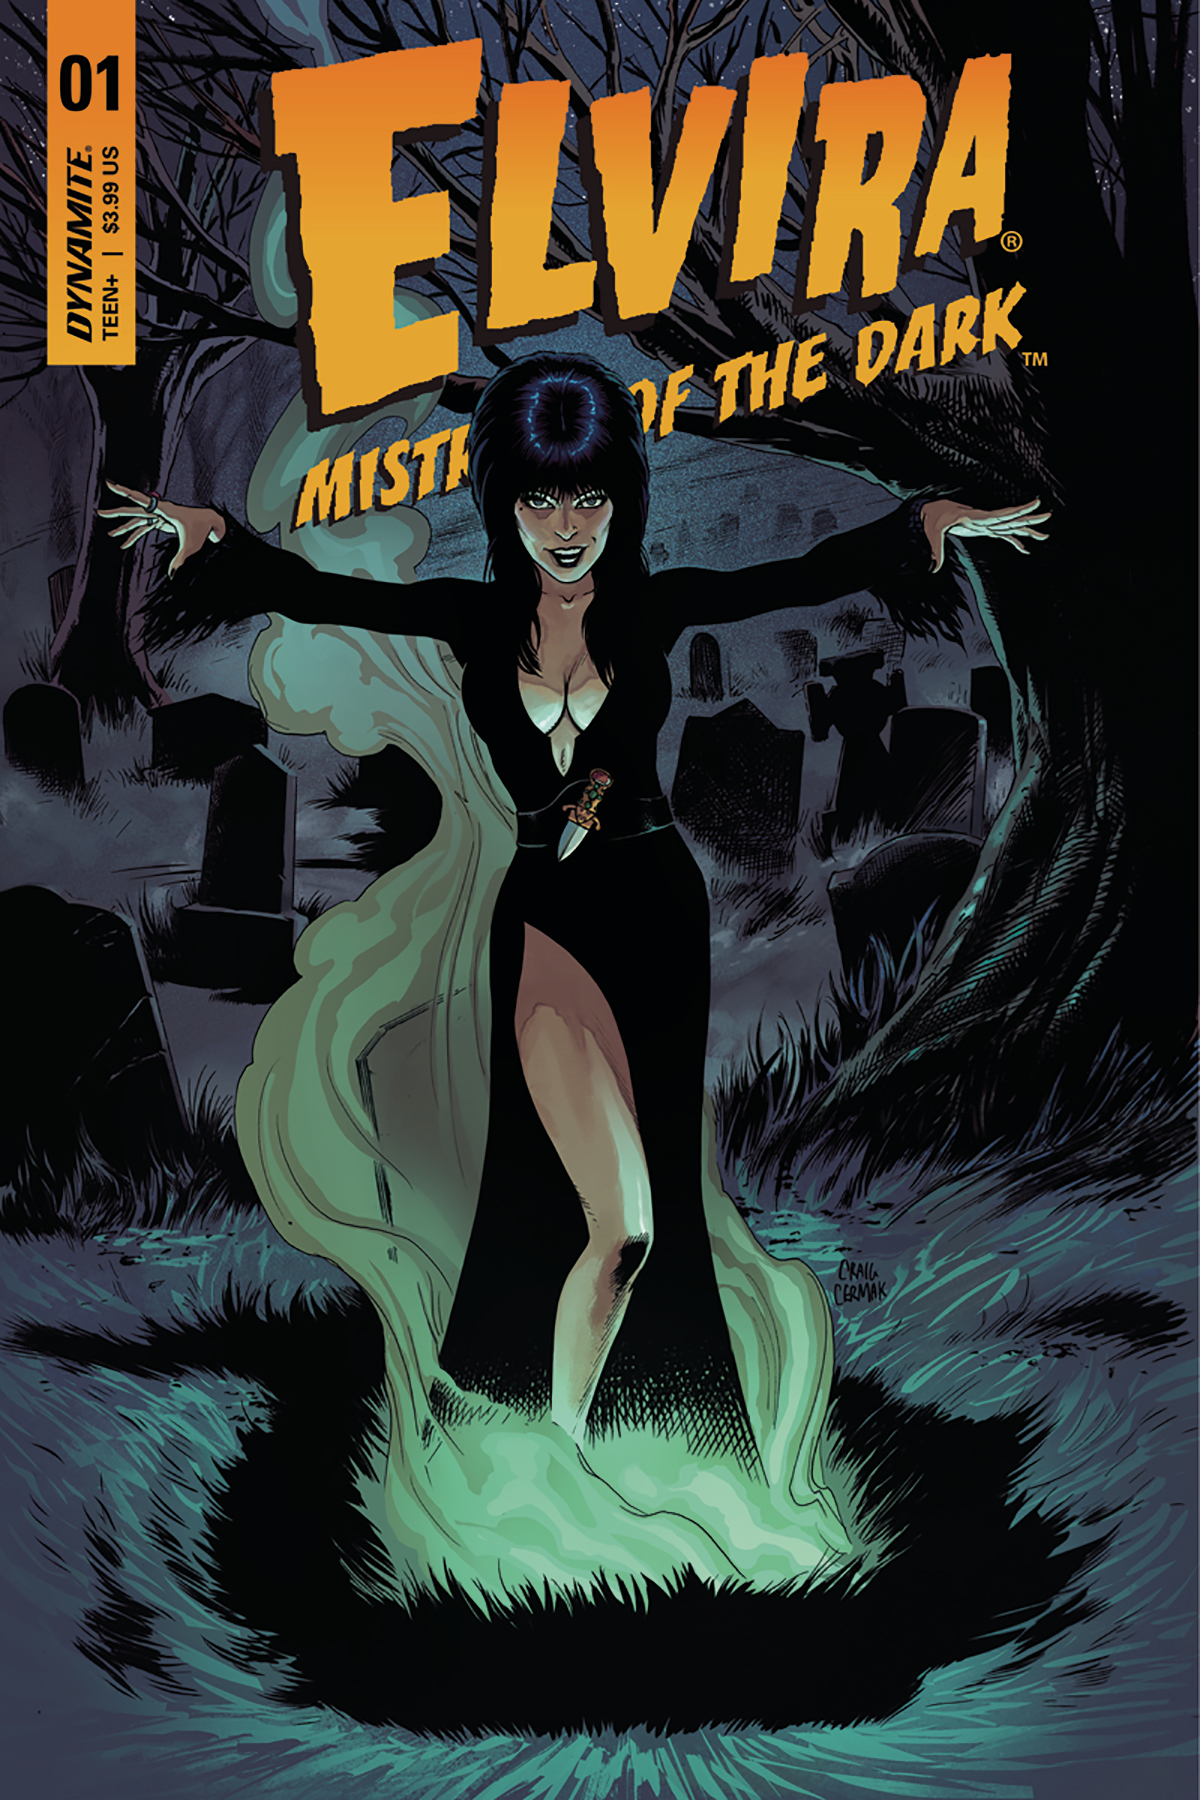 Elvira mistress of the dark comic